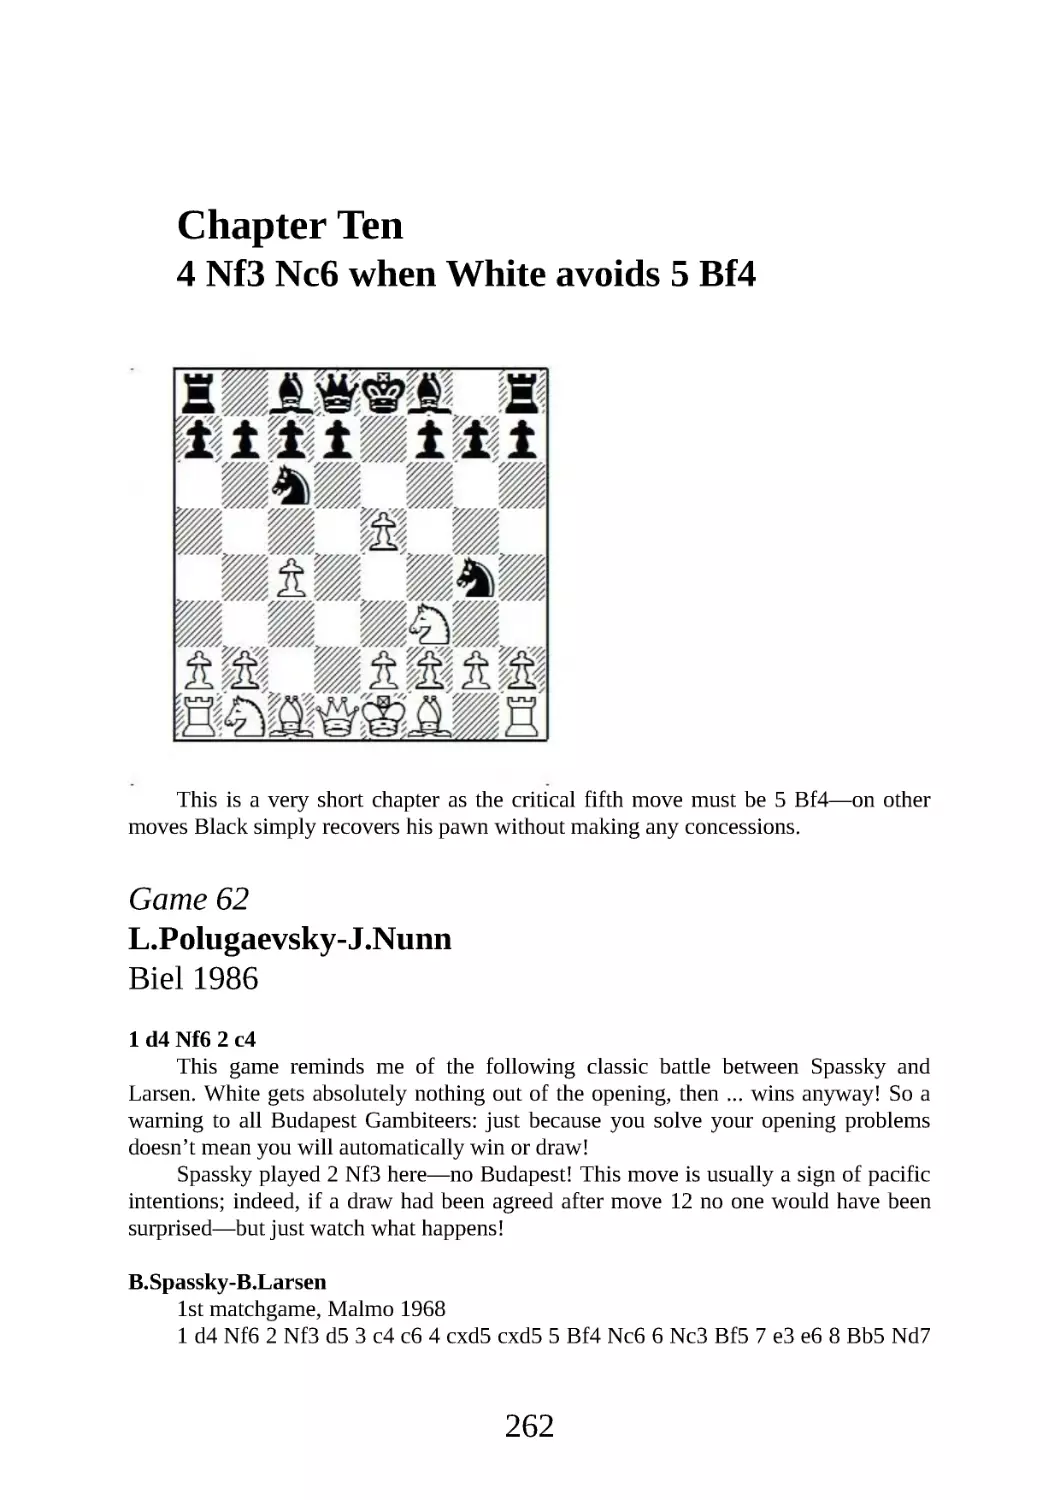 10 4 Nf3 Nc6 when White avoids 5 Bf4